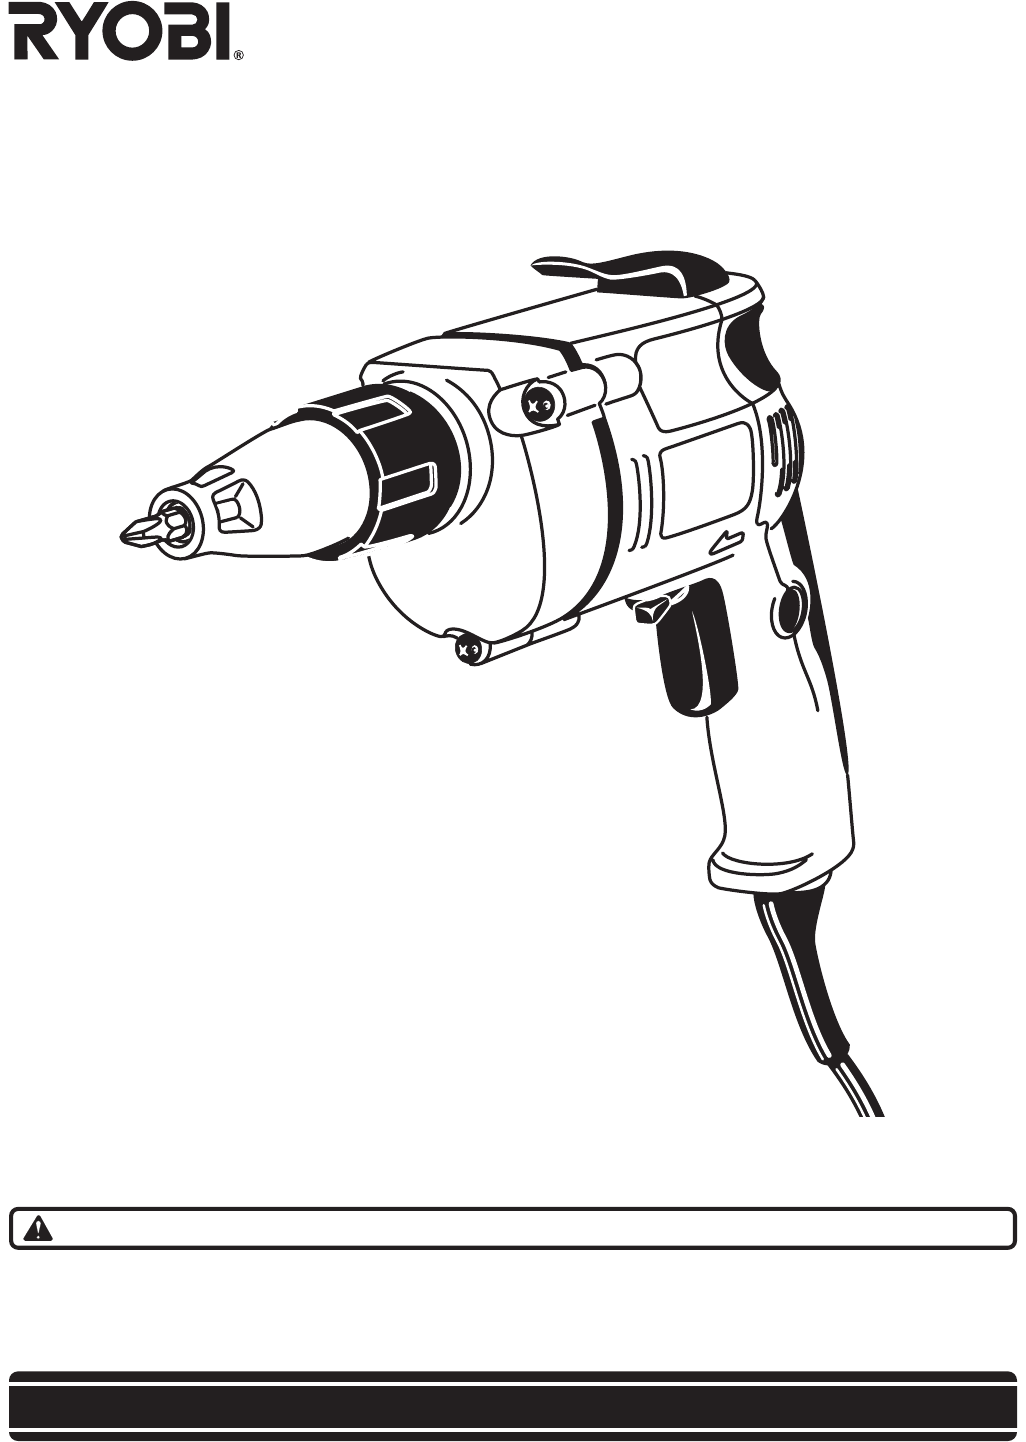 Ryobi cordless screwdriver manual